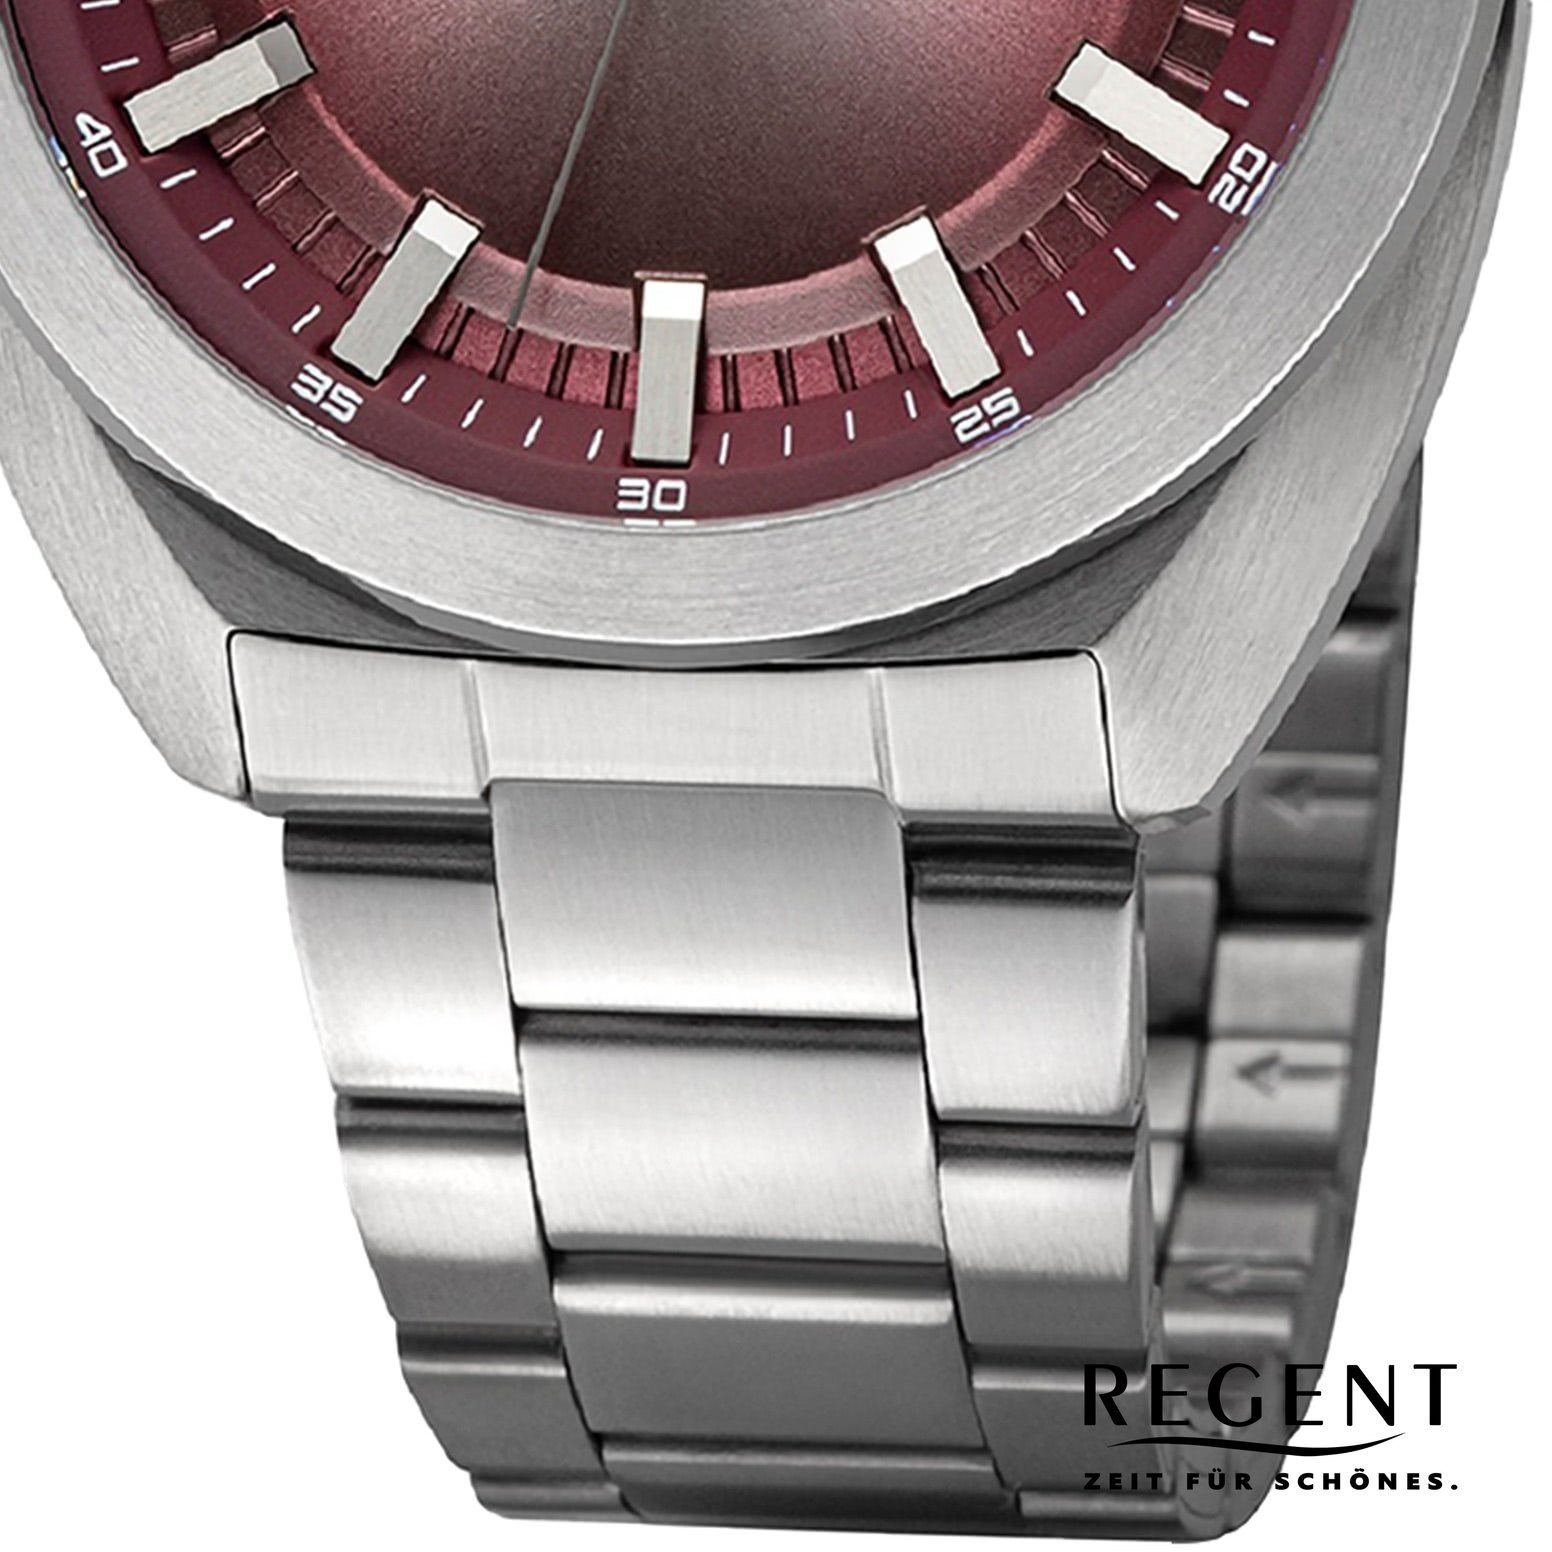 Regent Quarzuhr Regent Herren rot 41,5mm), Metallarmband extra groß Herren rund, Armbanduhr (ca. Analog, Armbanduhr